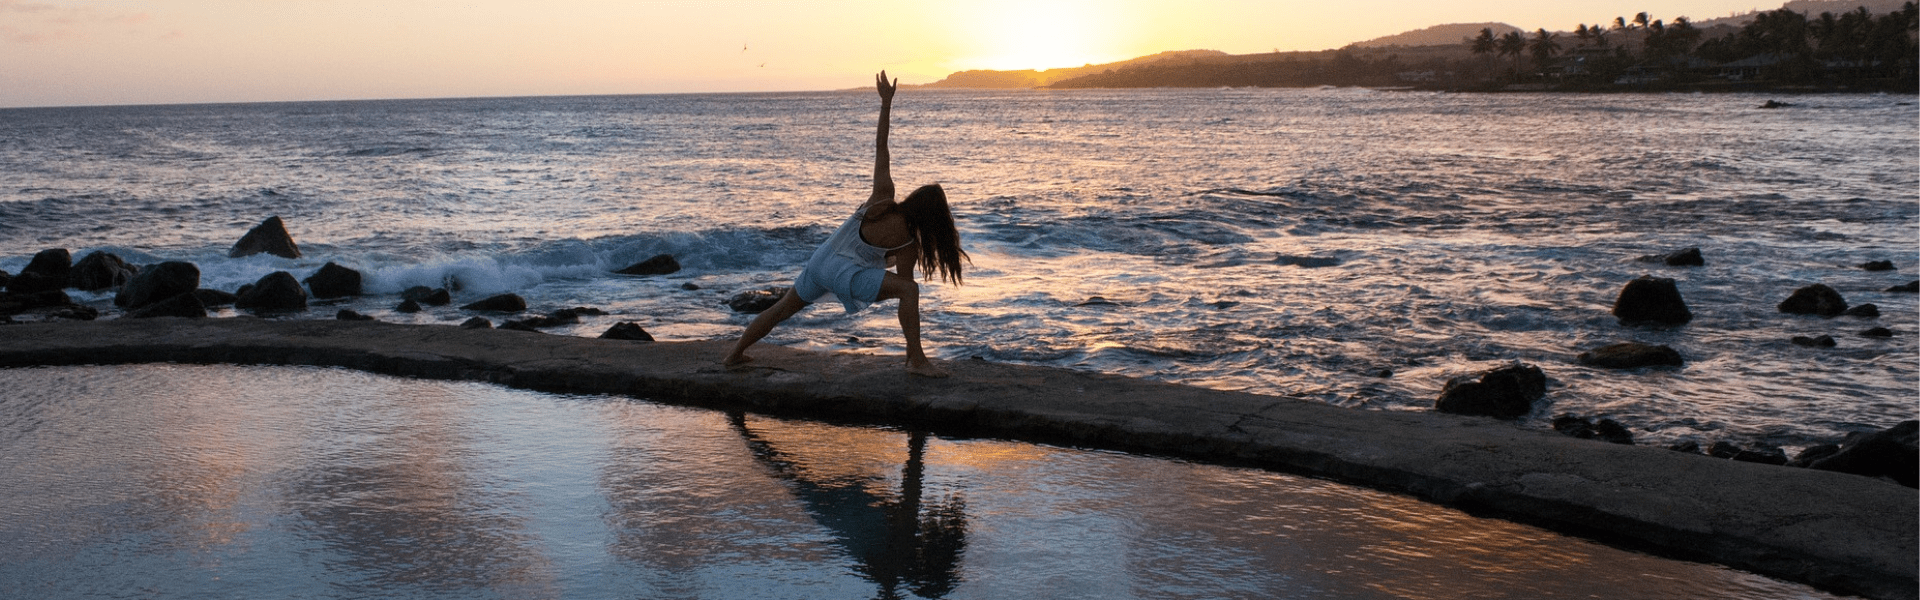 yoga-reisen-strand